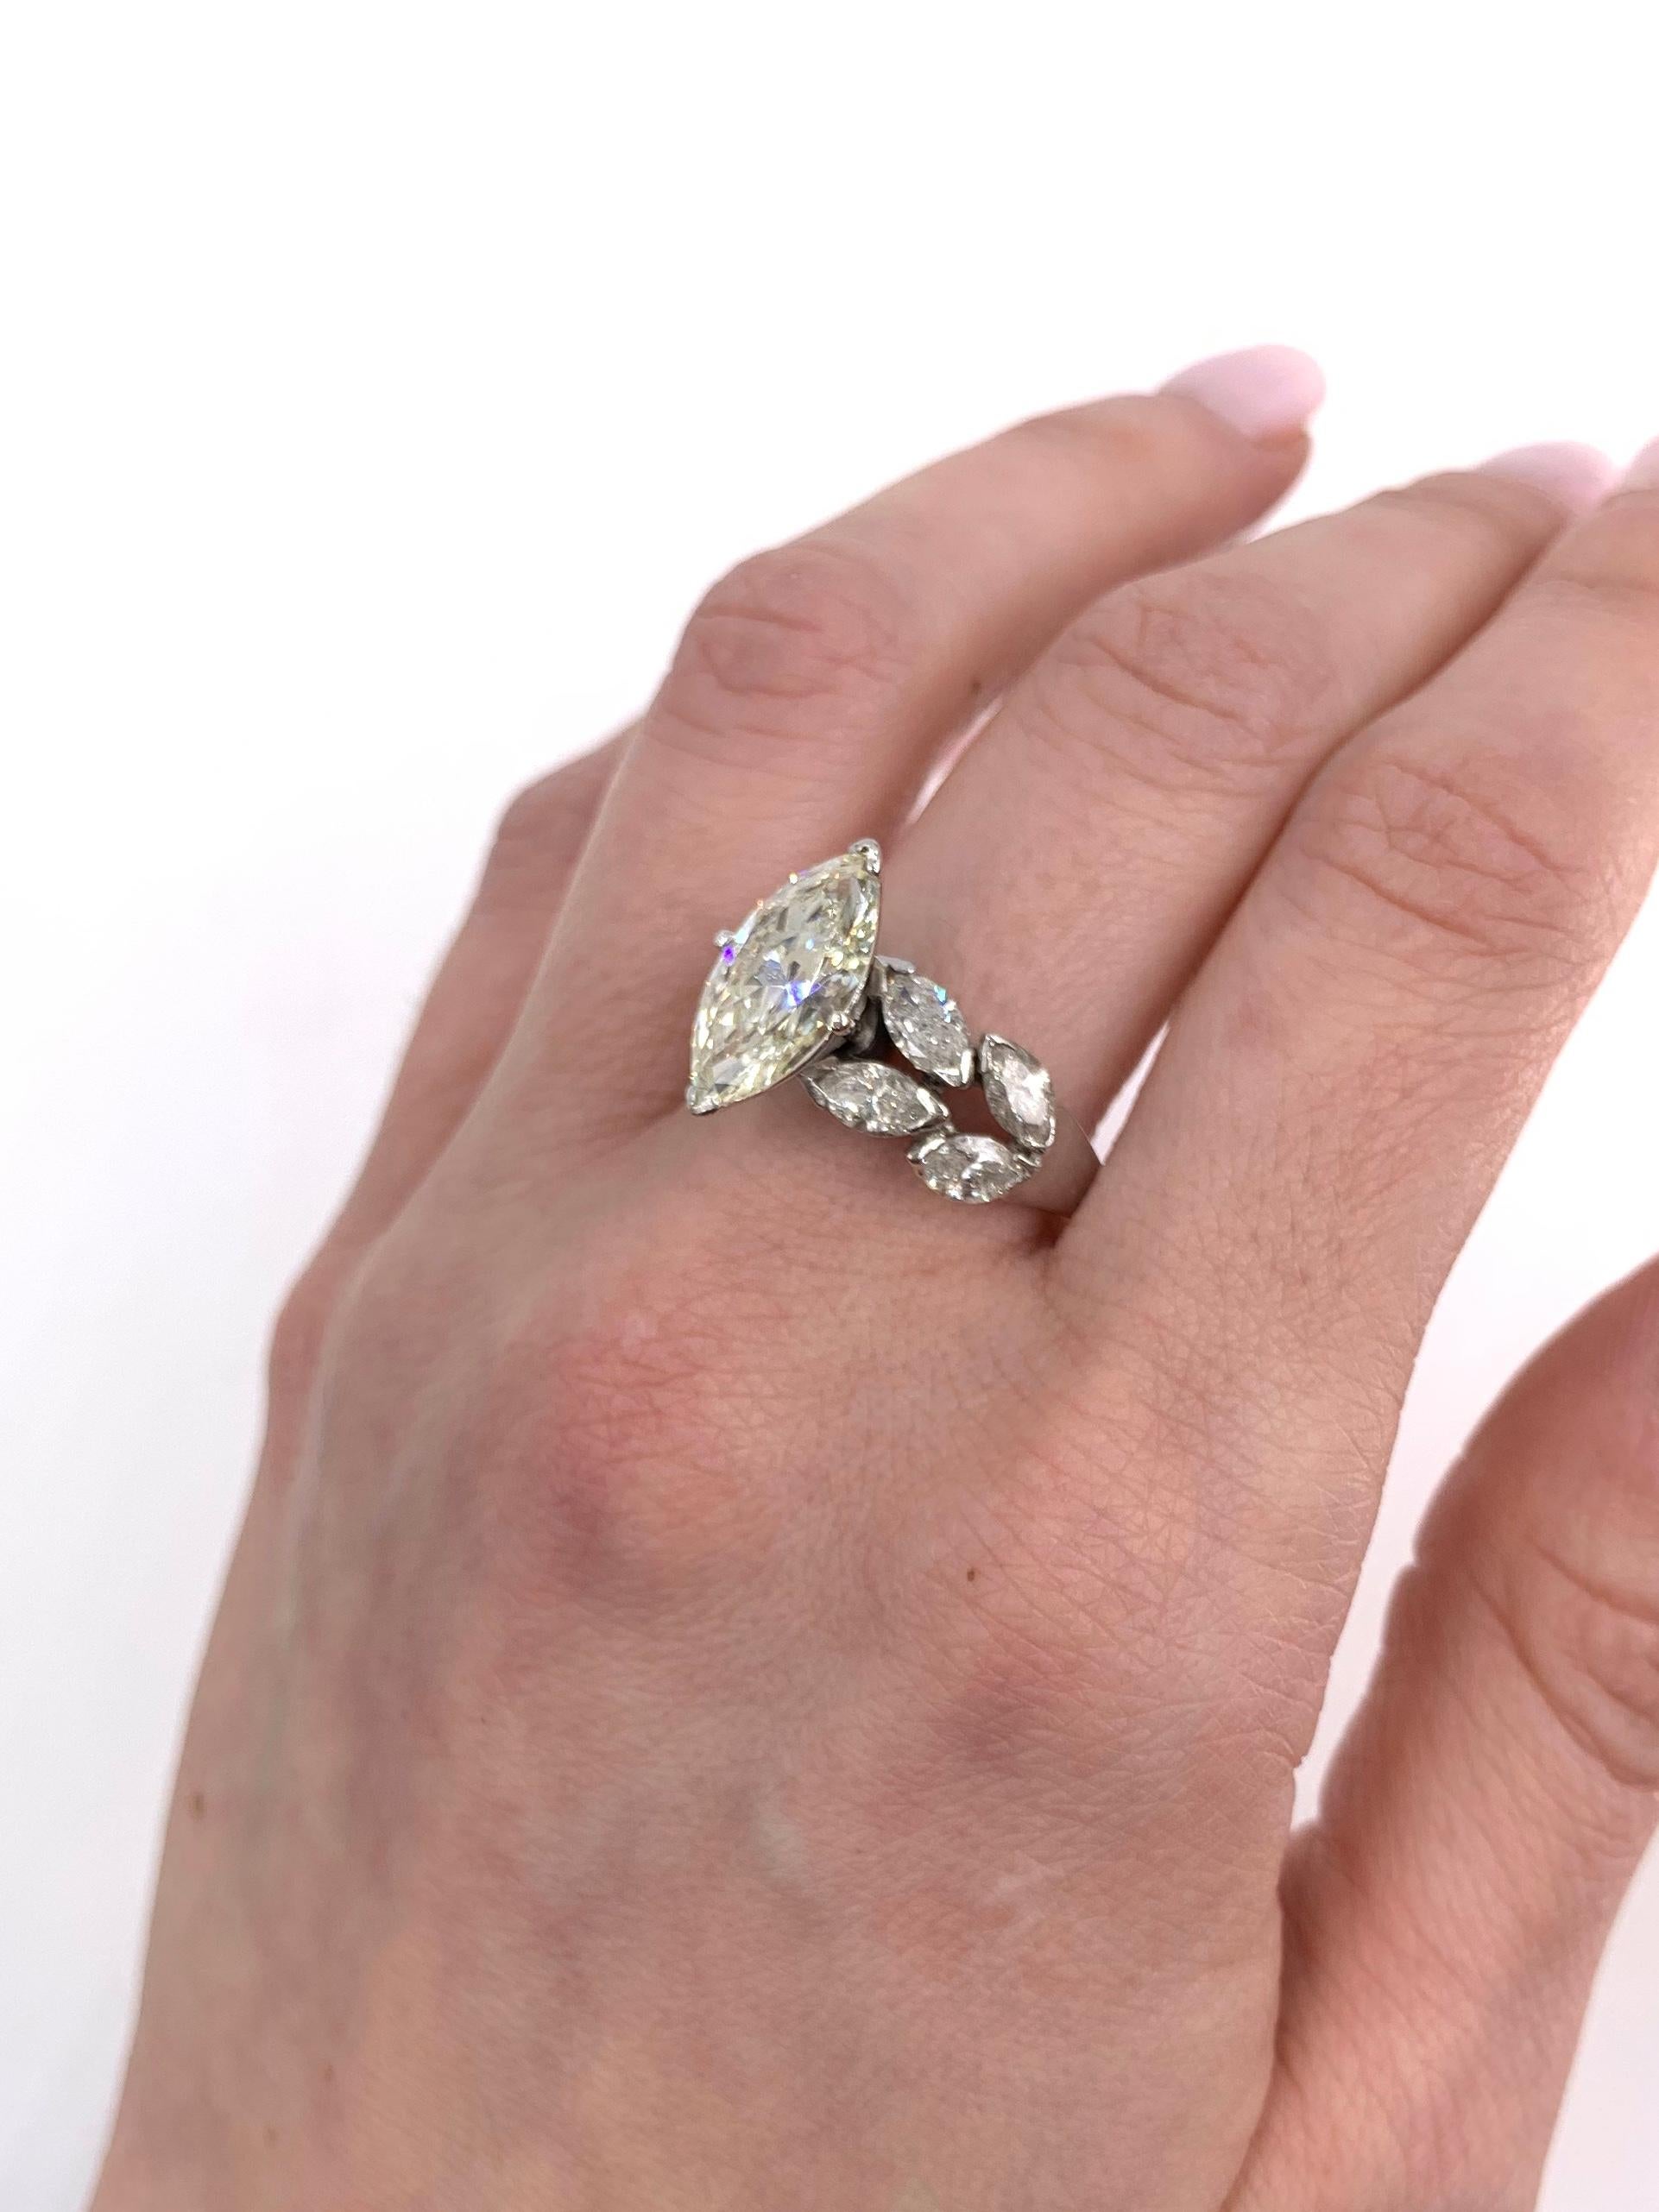 2.35 carat diamond ring